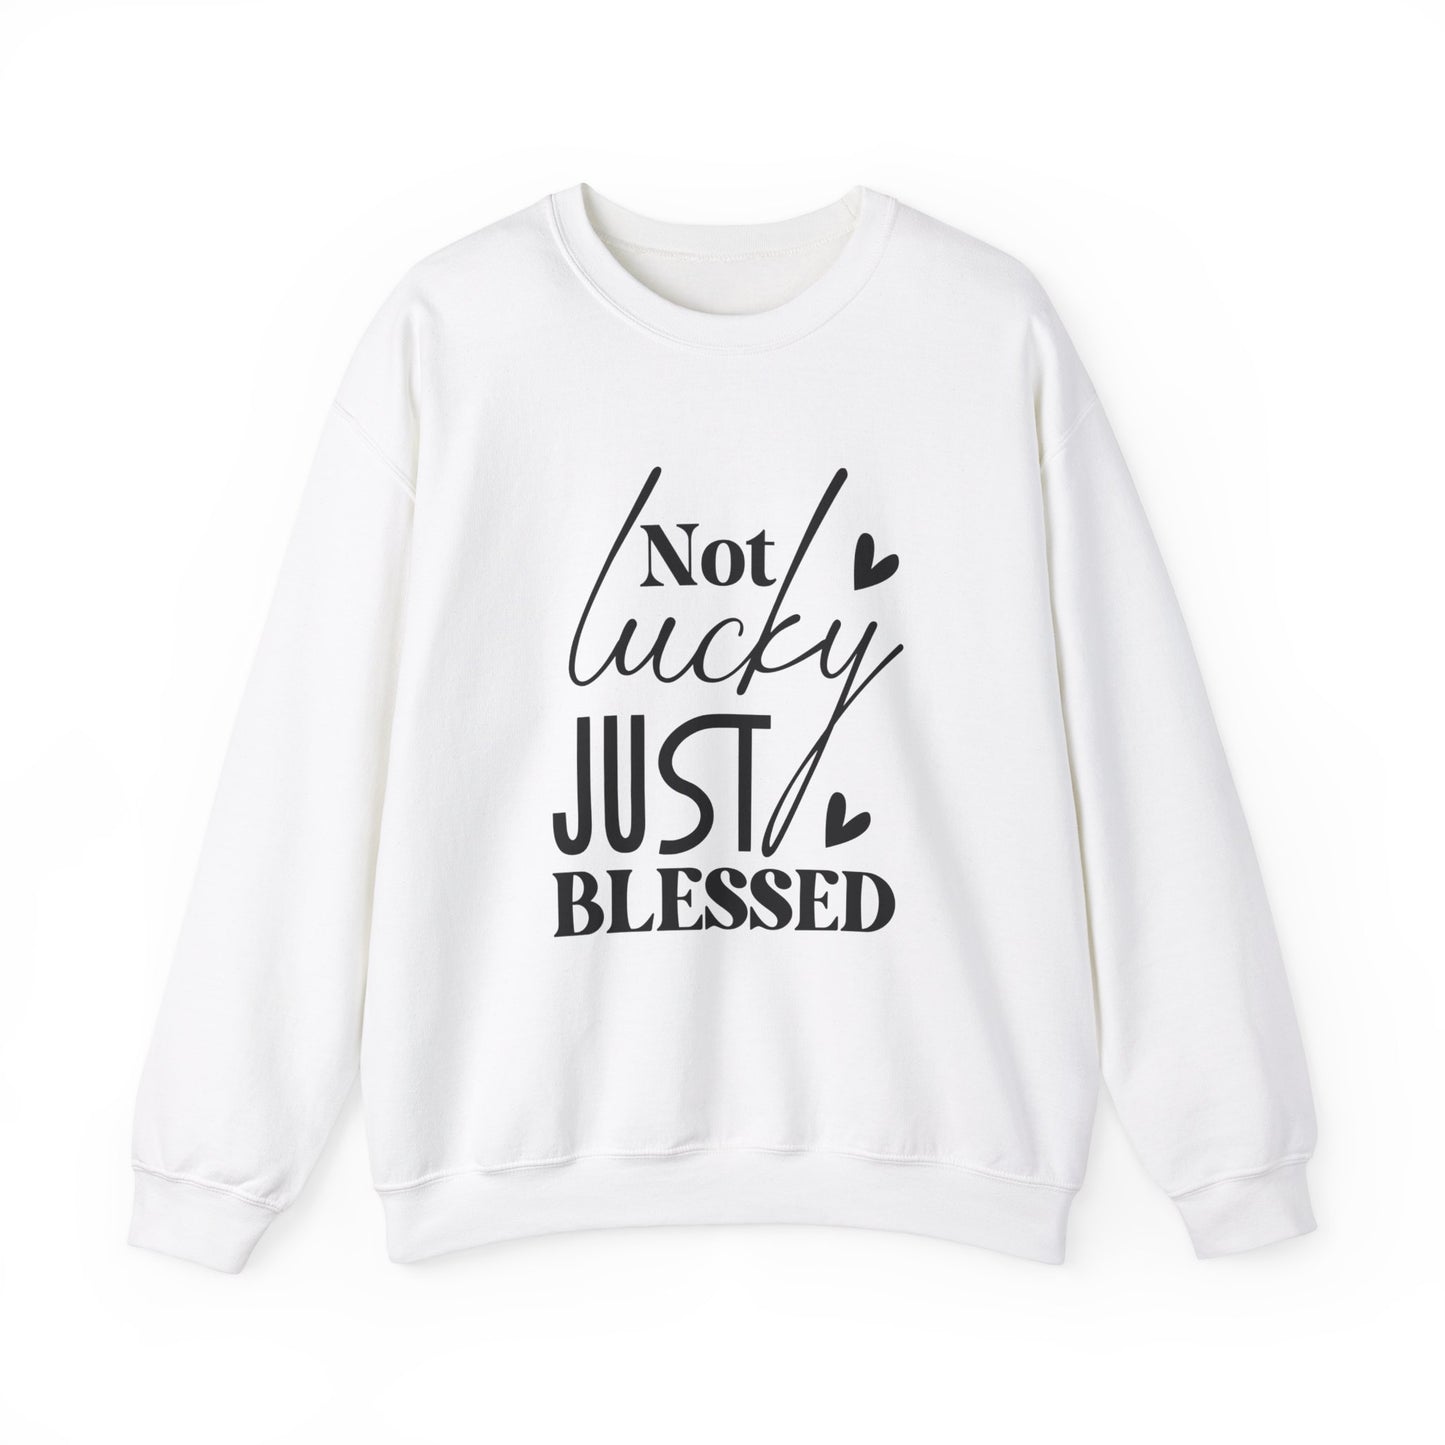 Just Blessed Women's Sweatshirt